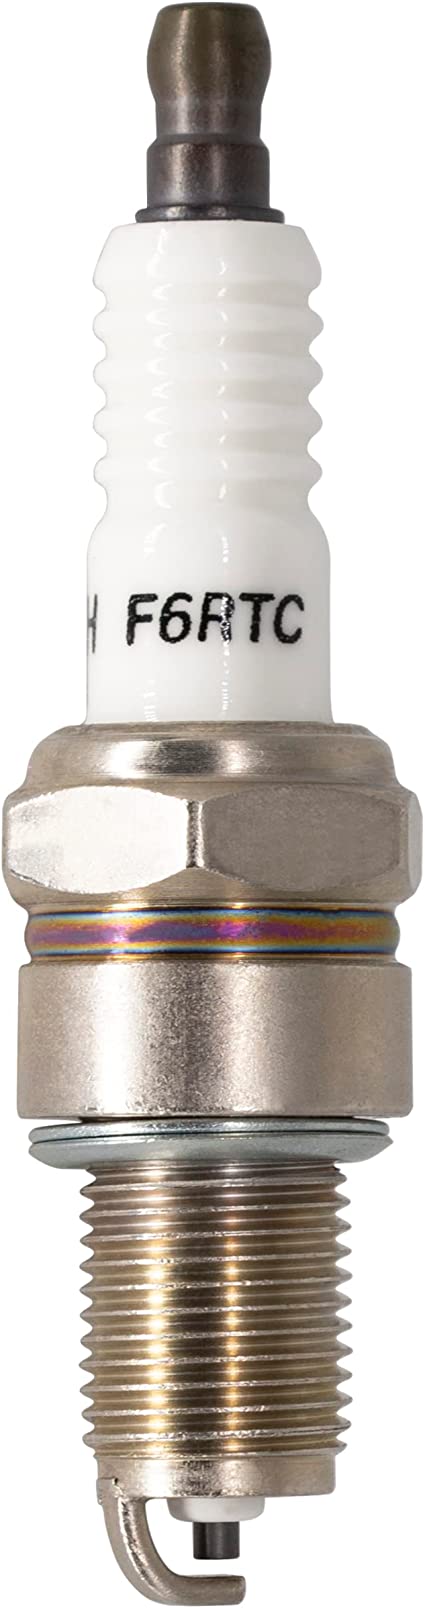 951-10292A (F6RTC) Spark Plug